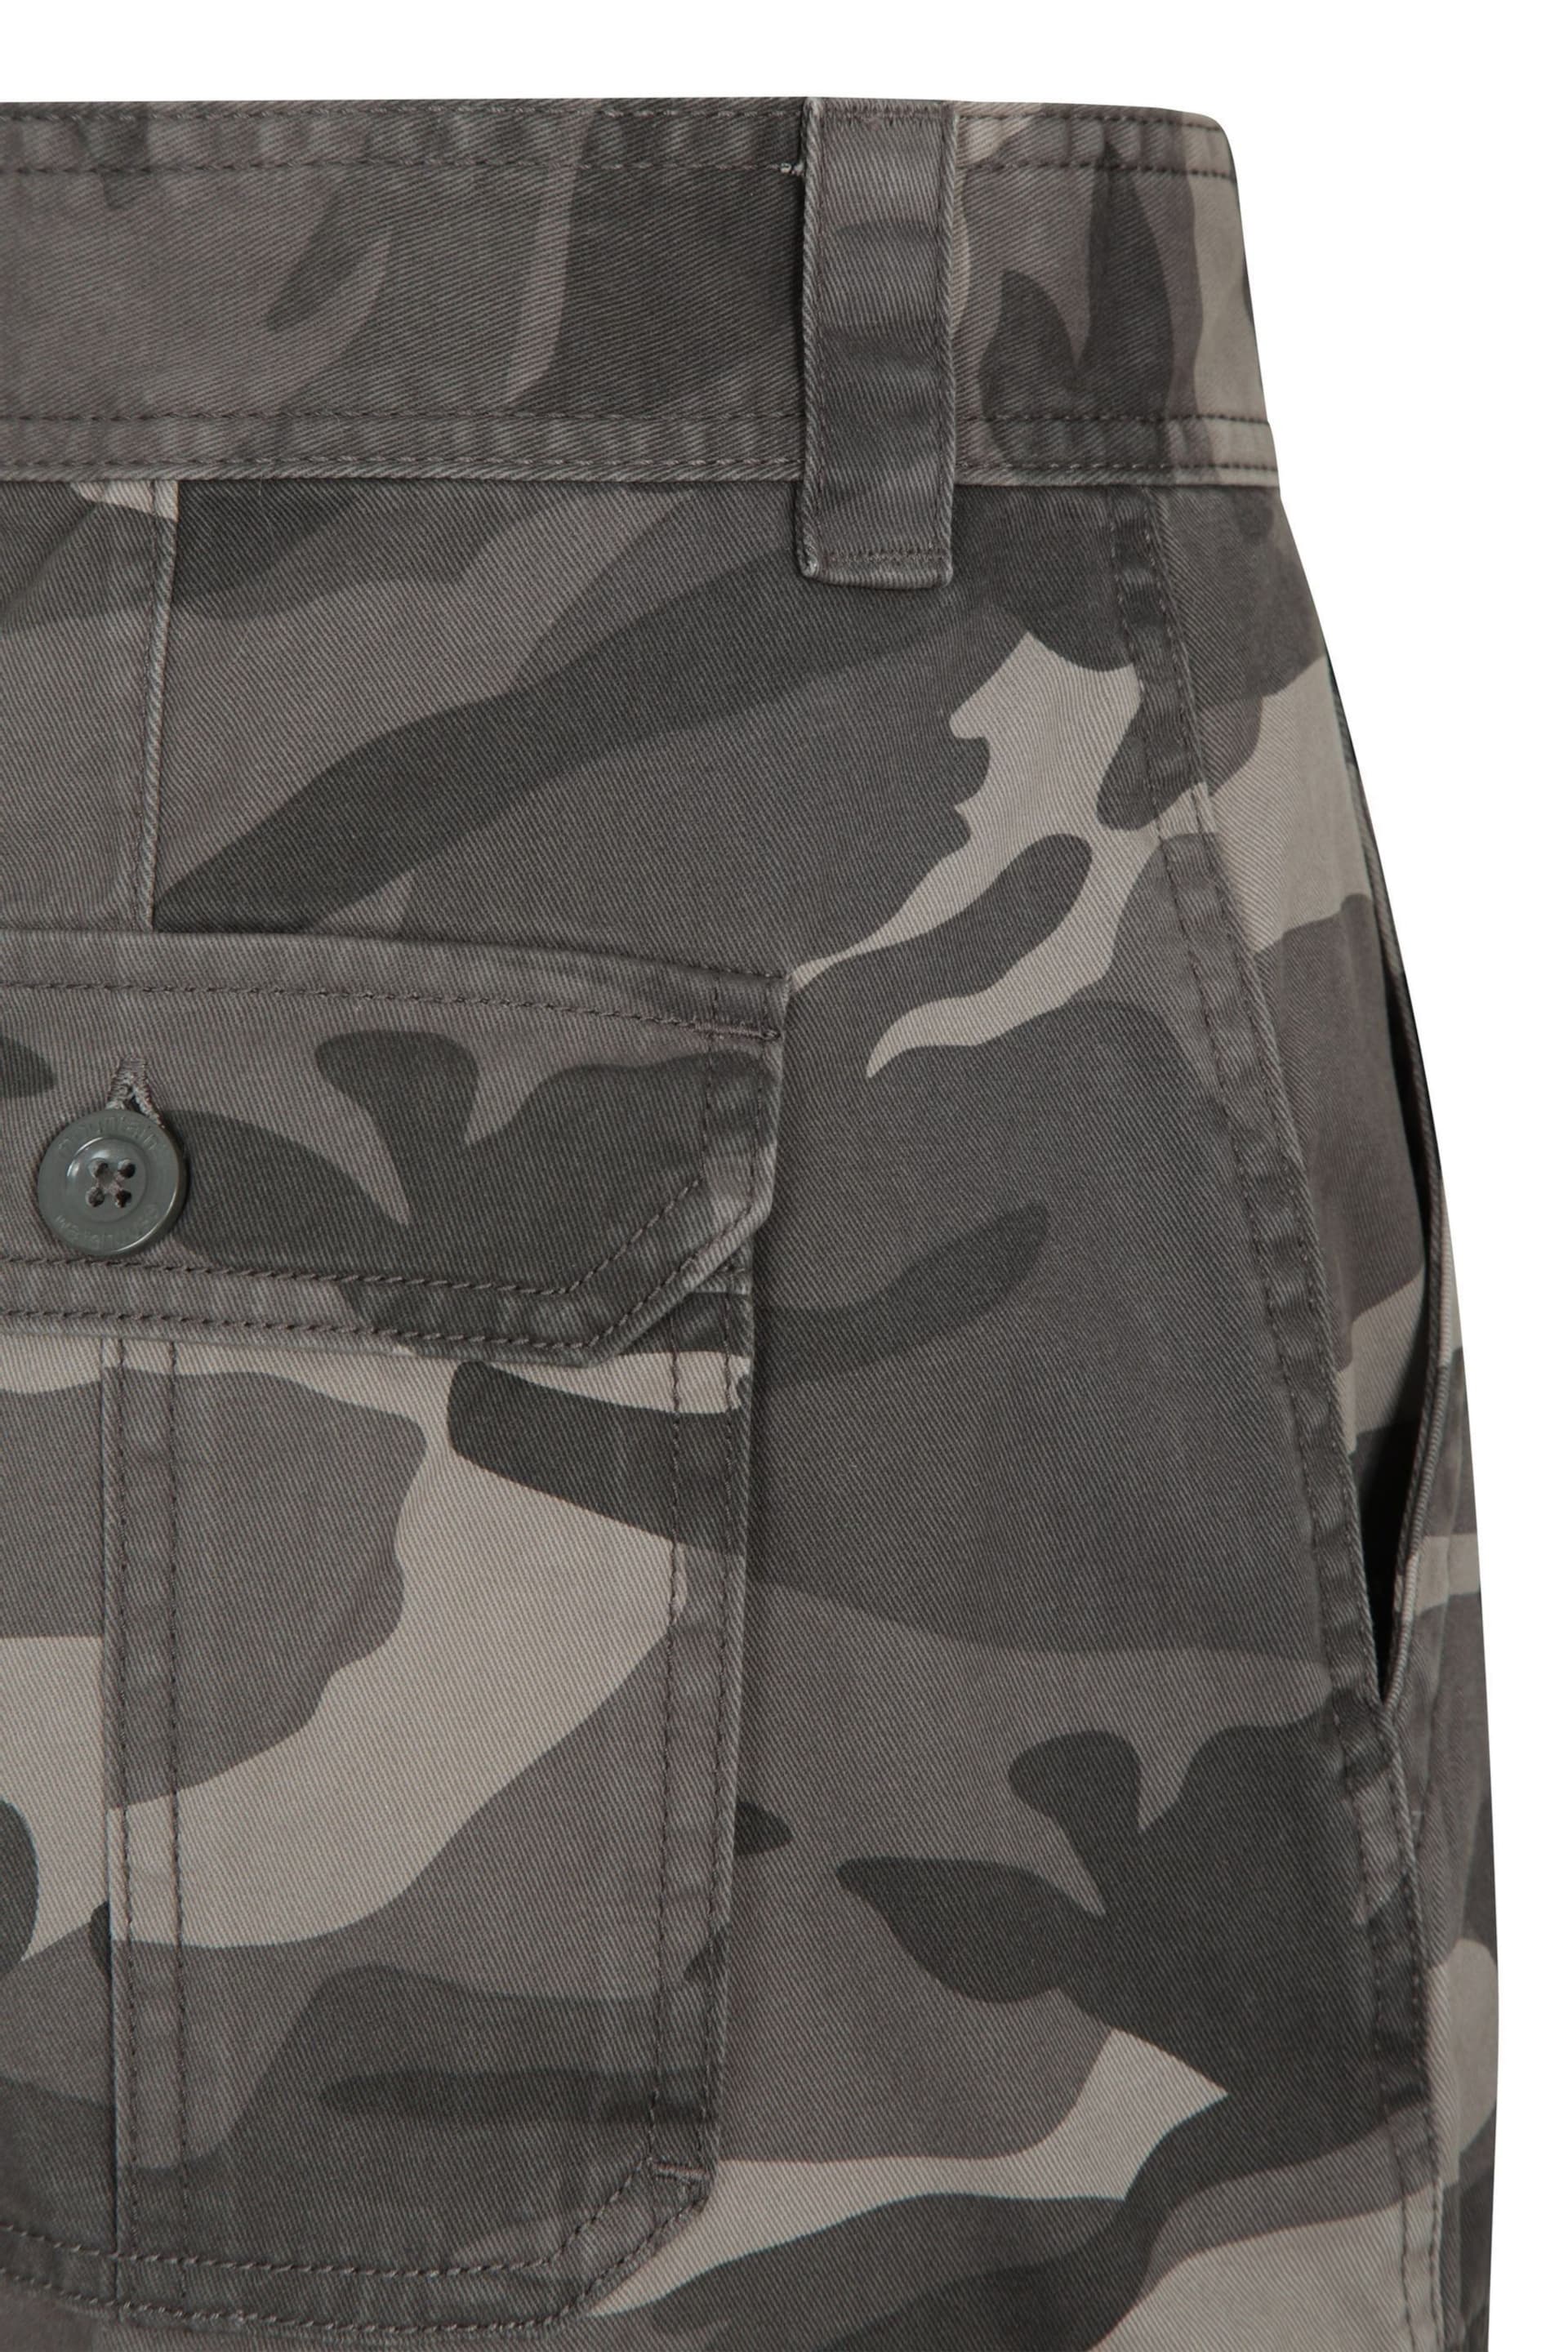 Mountain Warehouse Black Mens Camo 100% Cotton Lightweight Cargo Shorts - Image 5 of 5